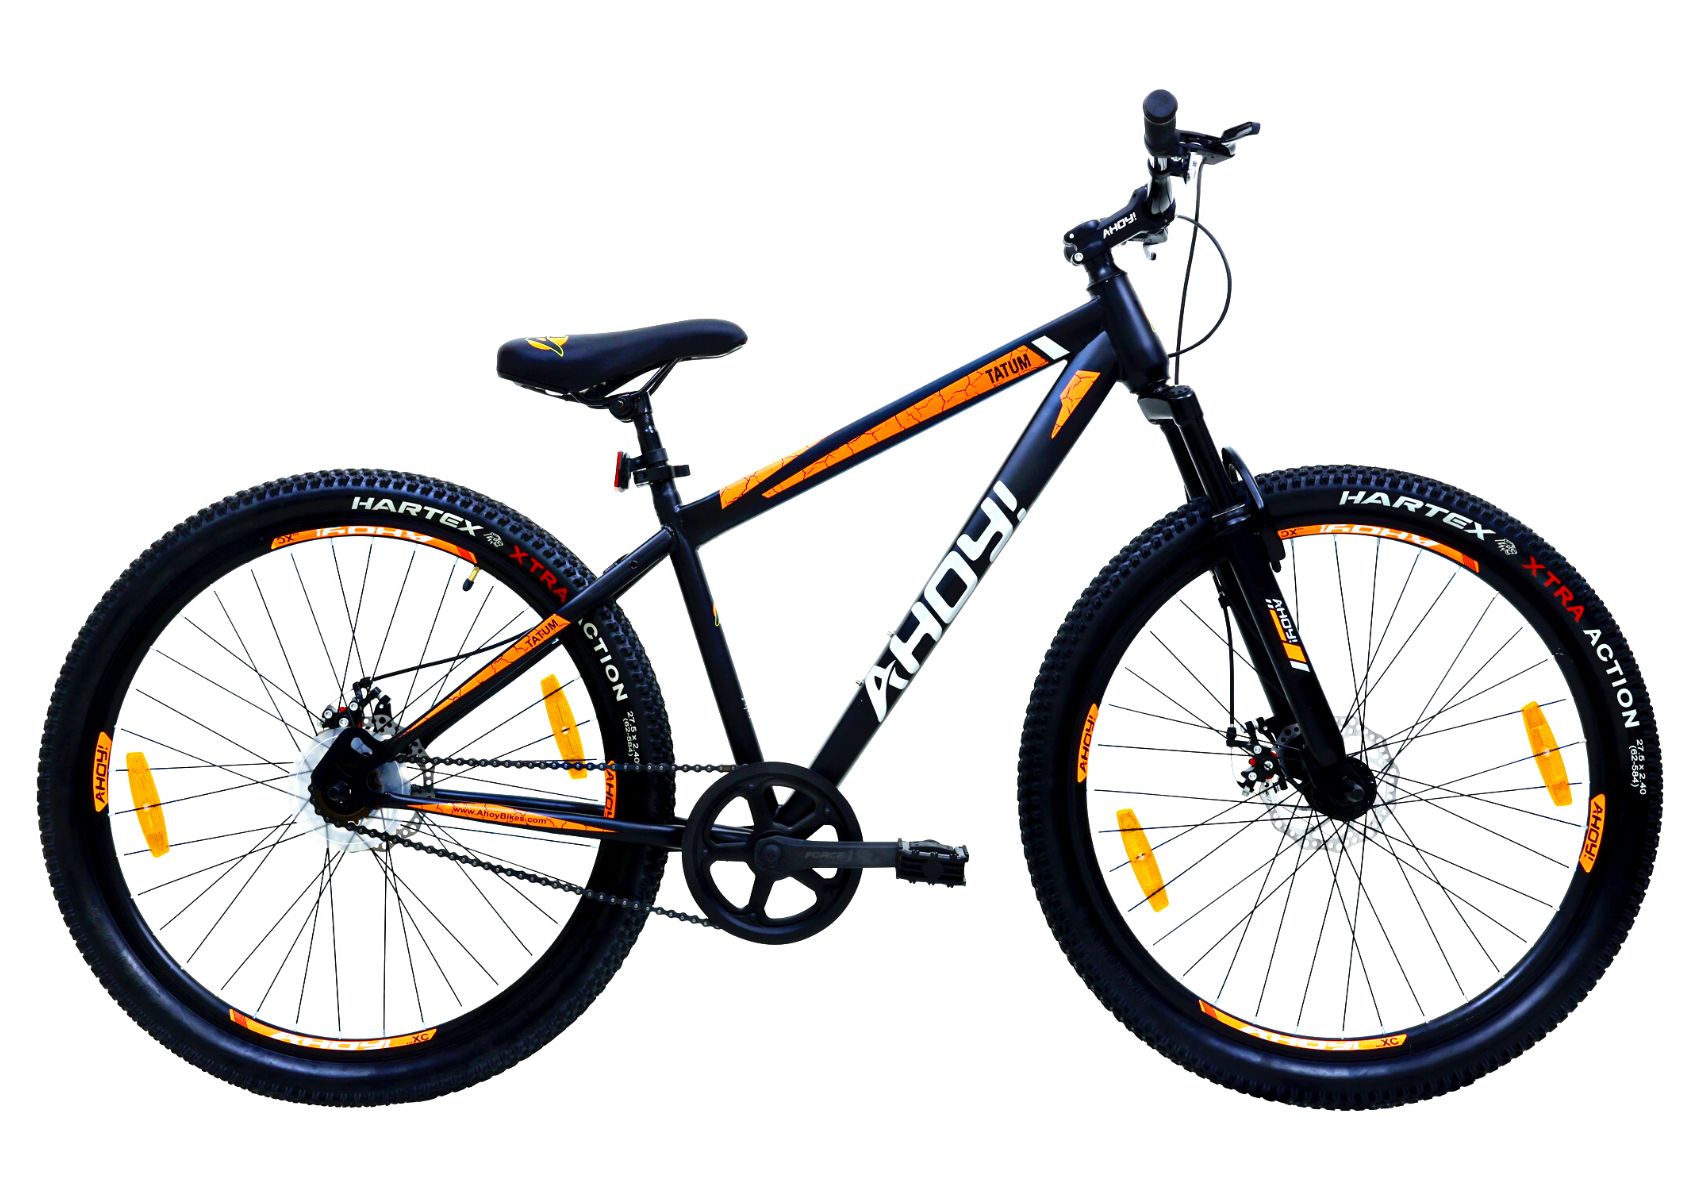 Tatum Non Gear Cycle 29T | Buy Black All Terrain Bike for Men